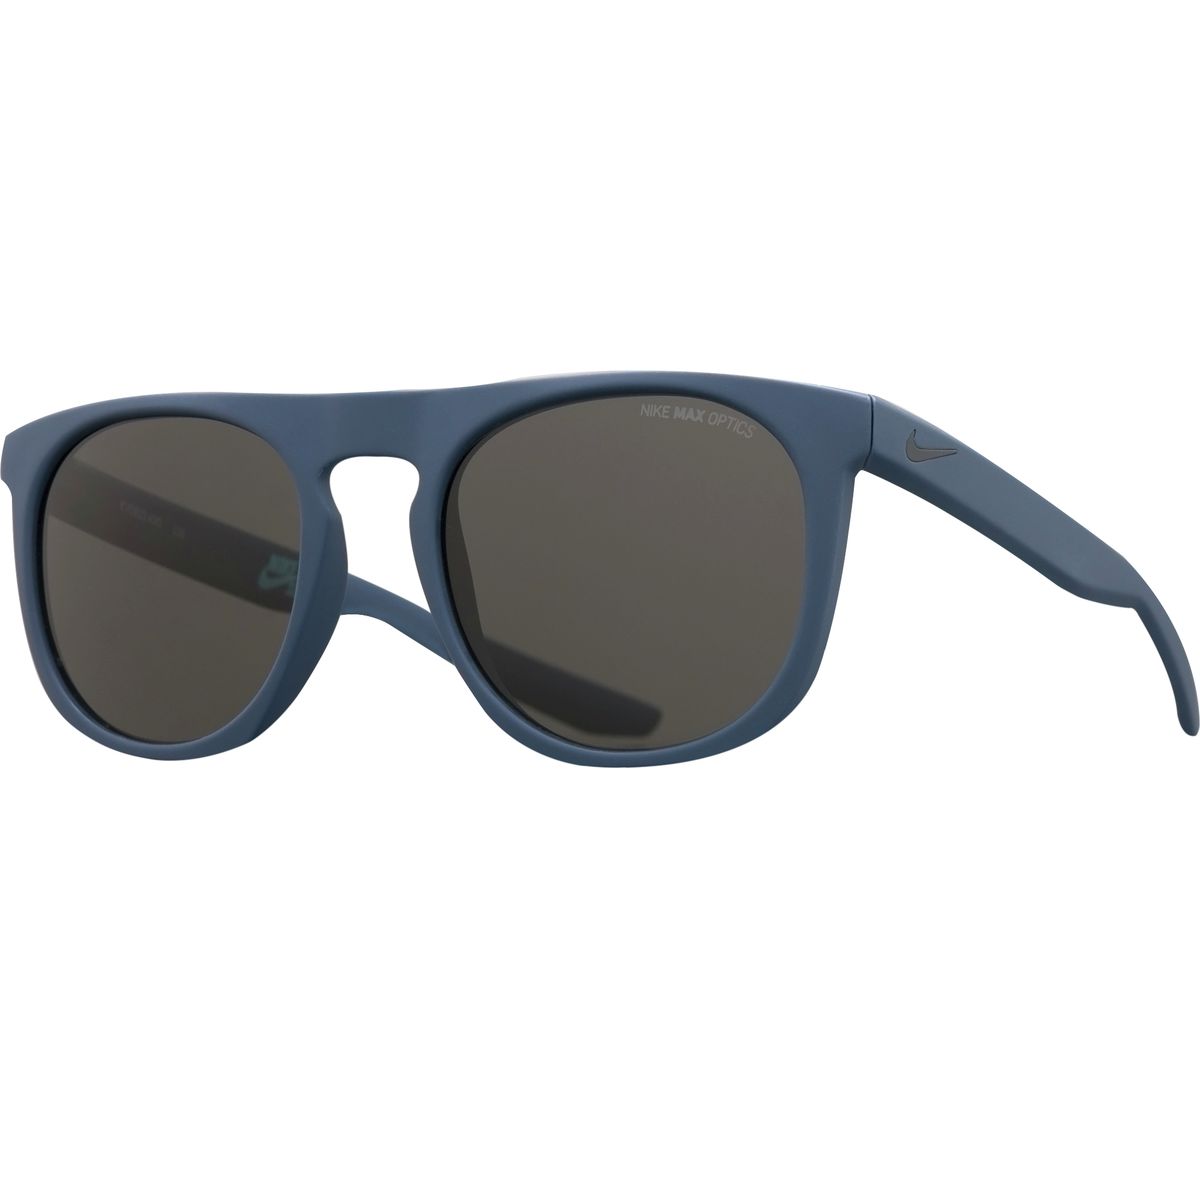 Nike Flatspot Sunglasses - Accessories